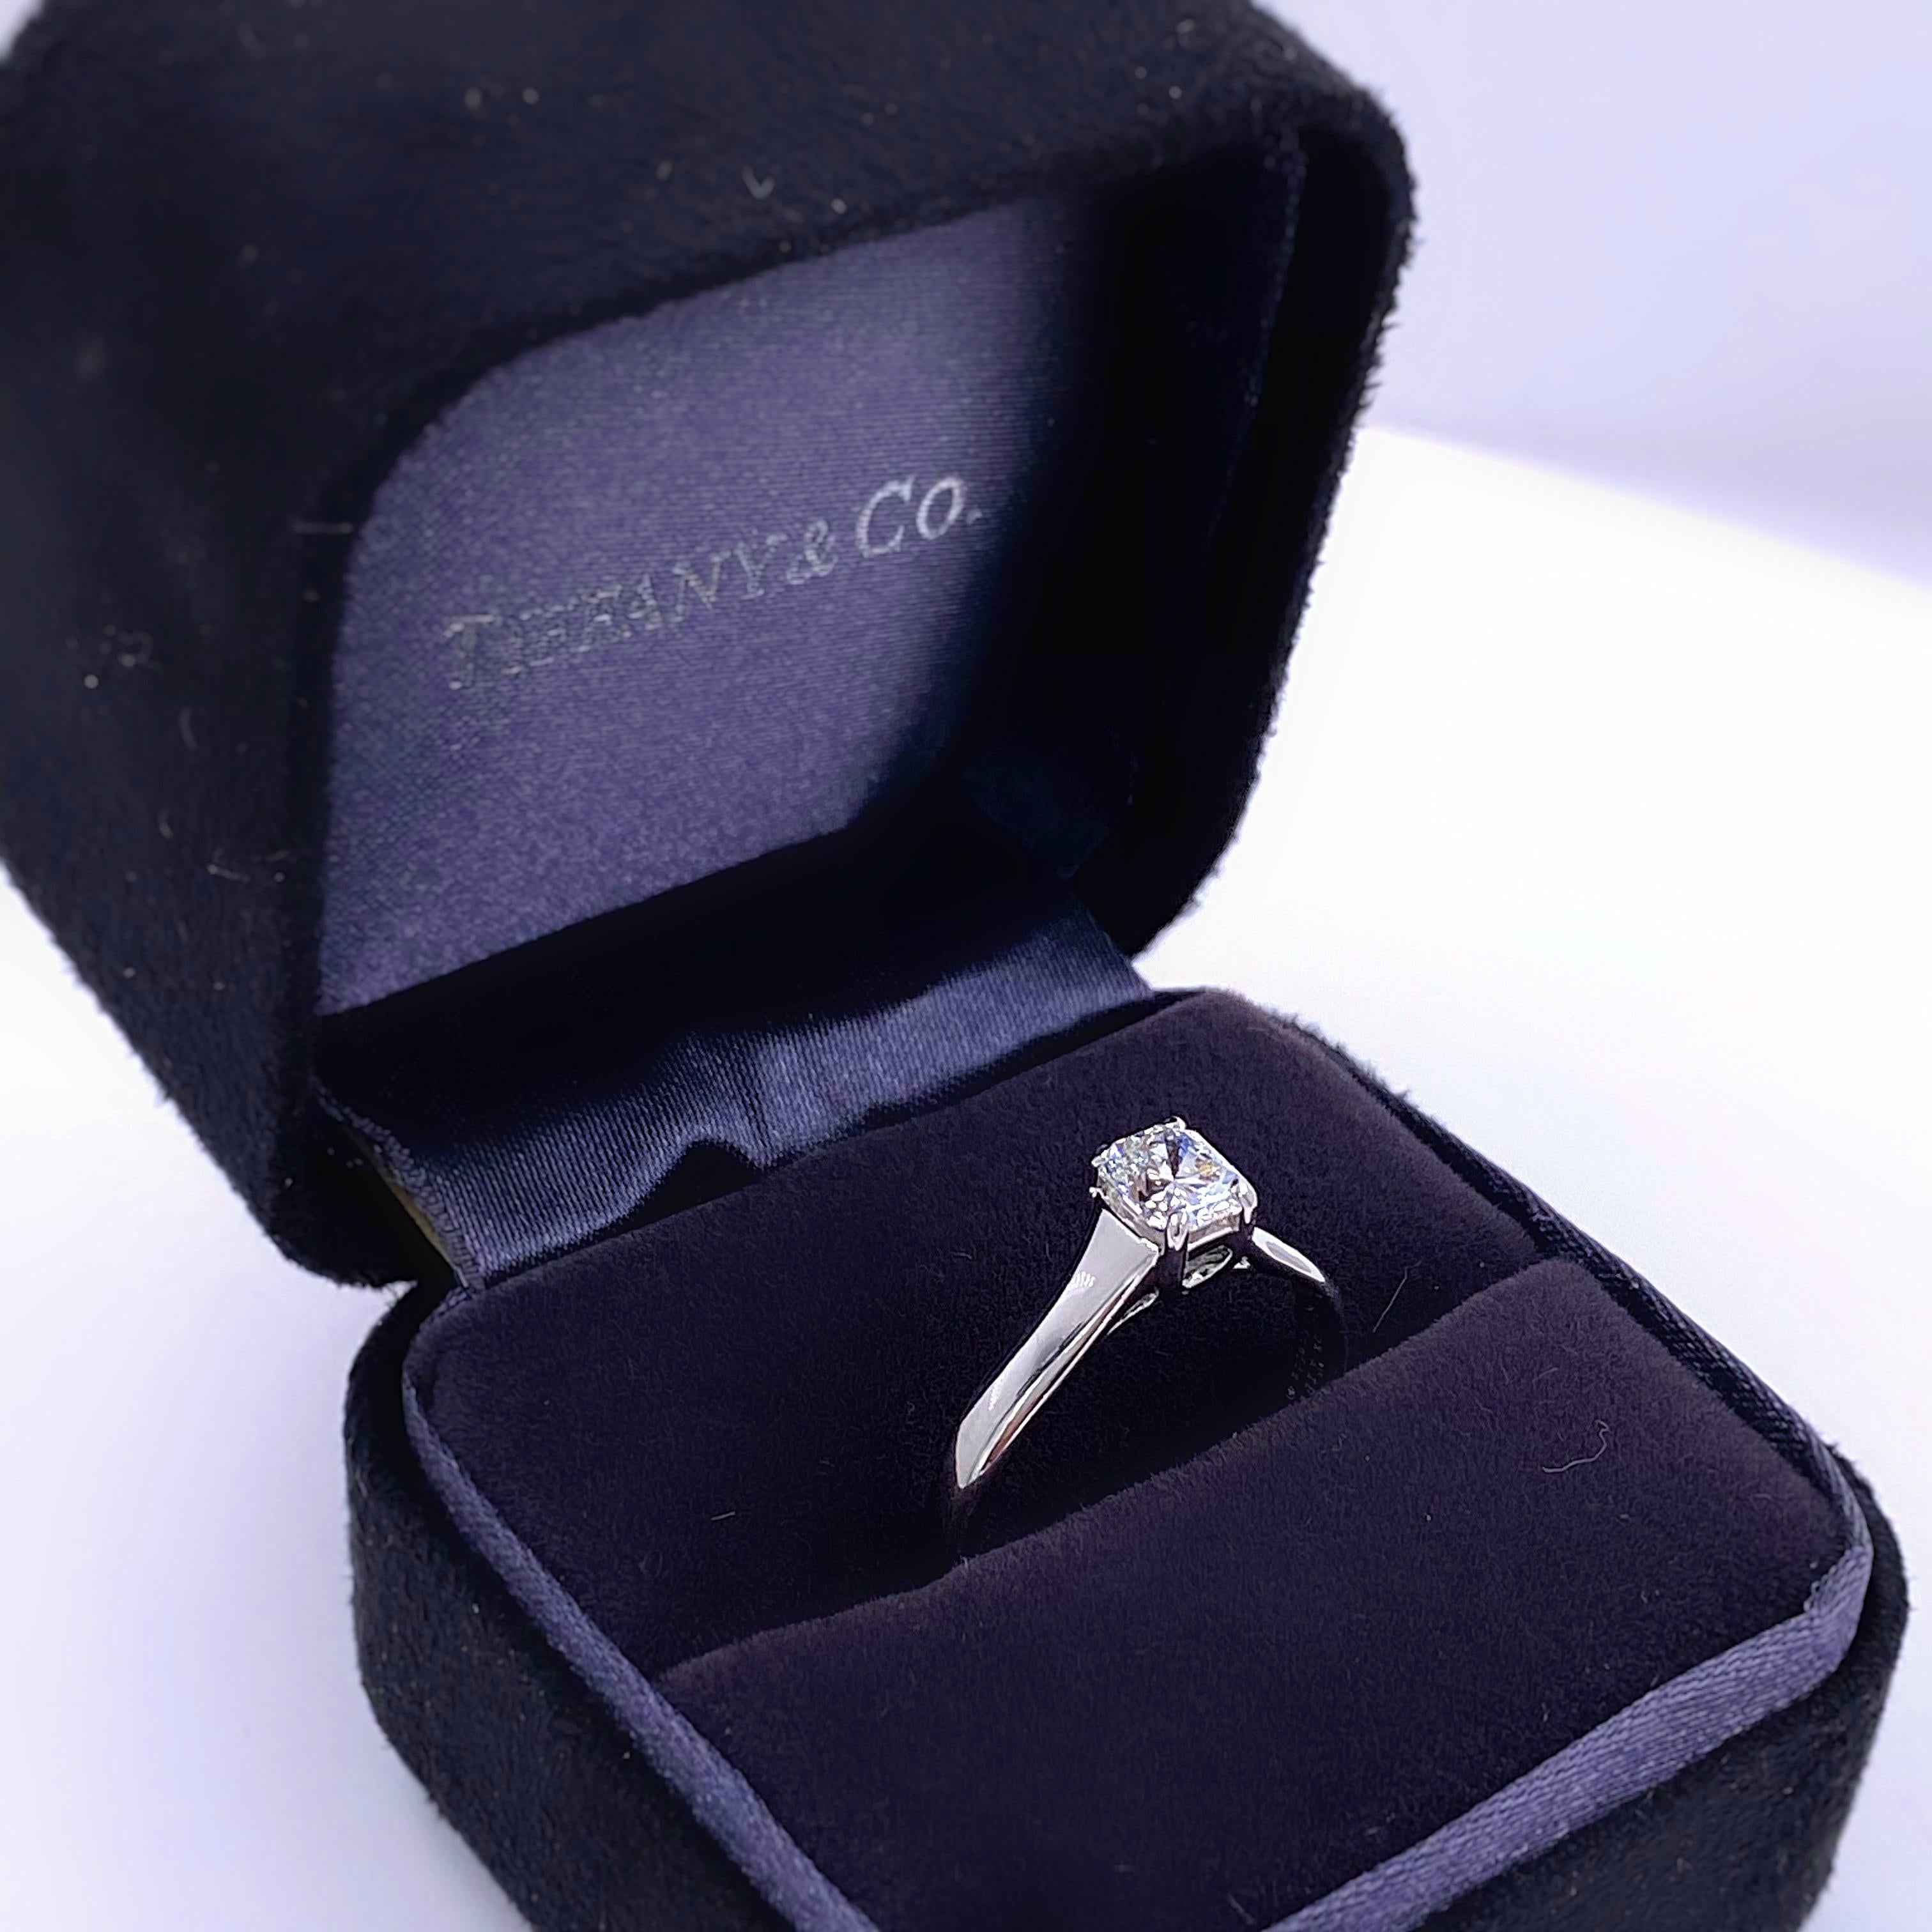 0.58 carat diamond ring